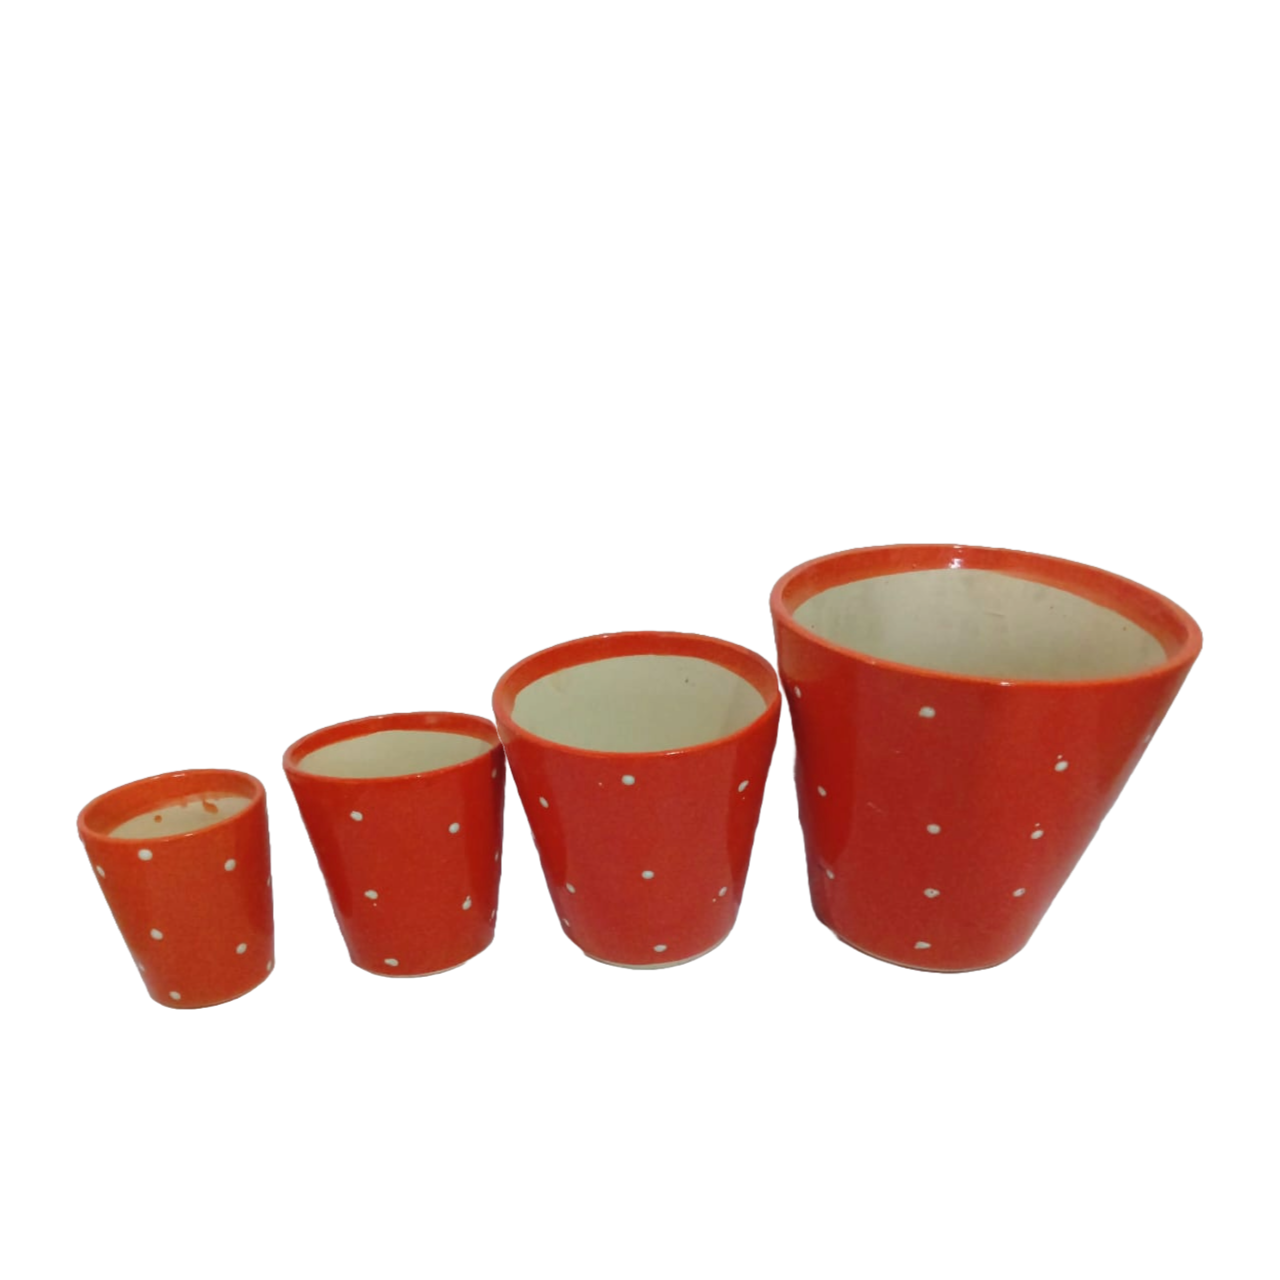 best premium planters, buy online ceramic pots for sale, buy now online ceramic planters on sale